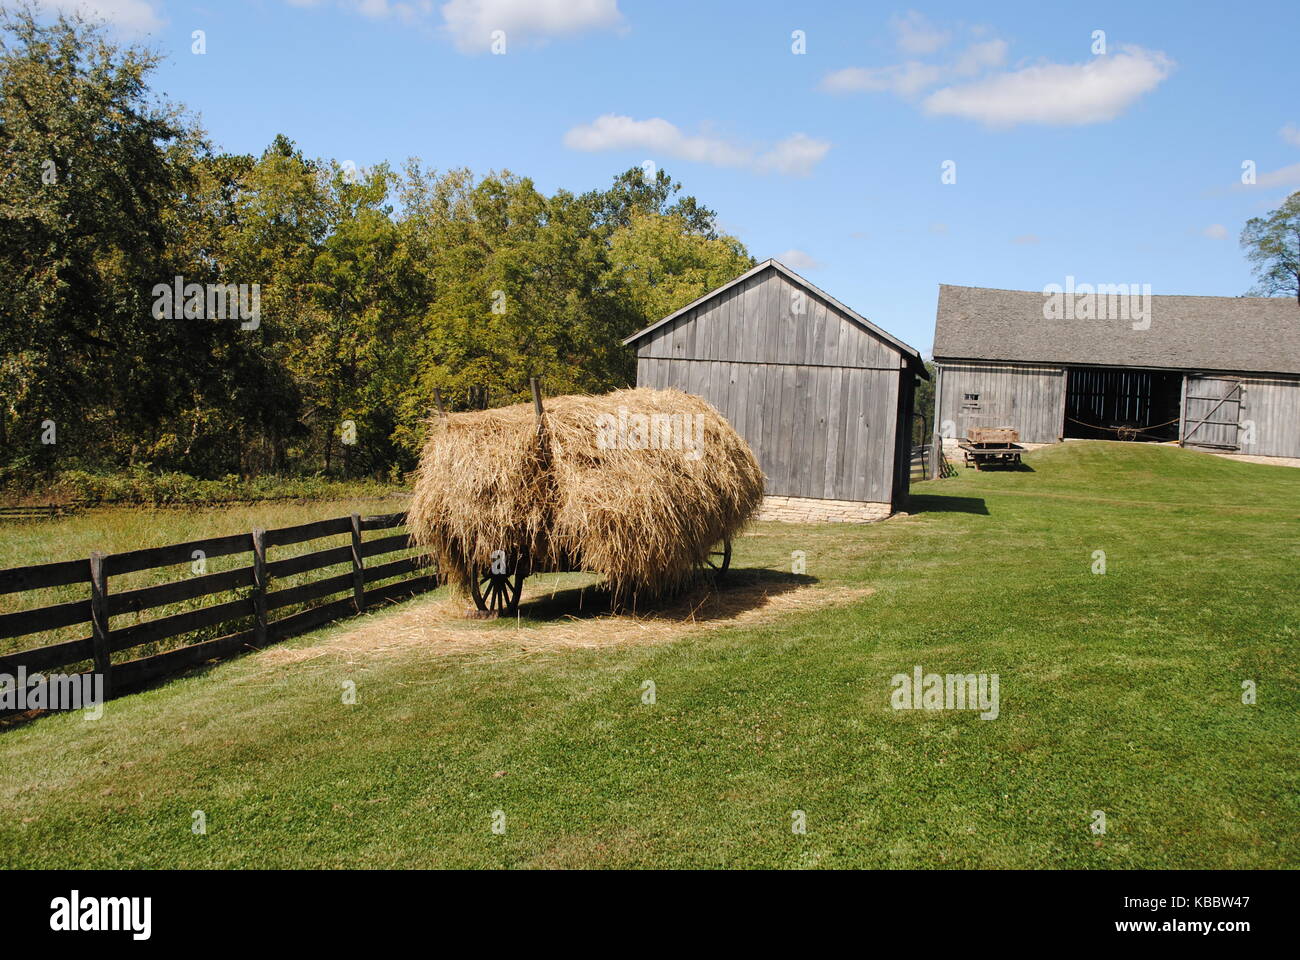 Hay trailer on a farm at a park Stock Photo